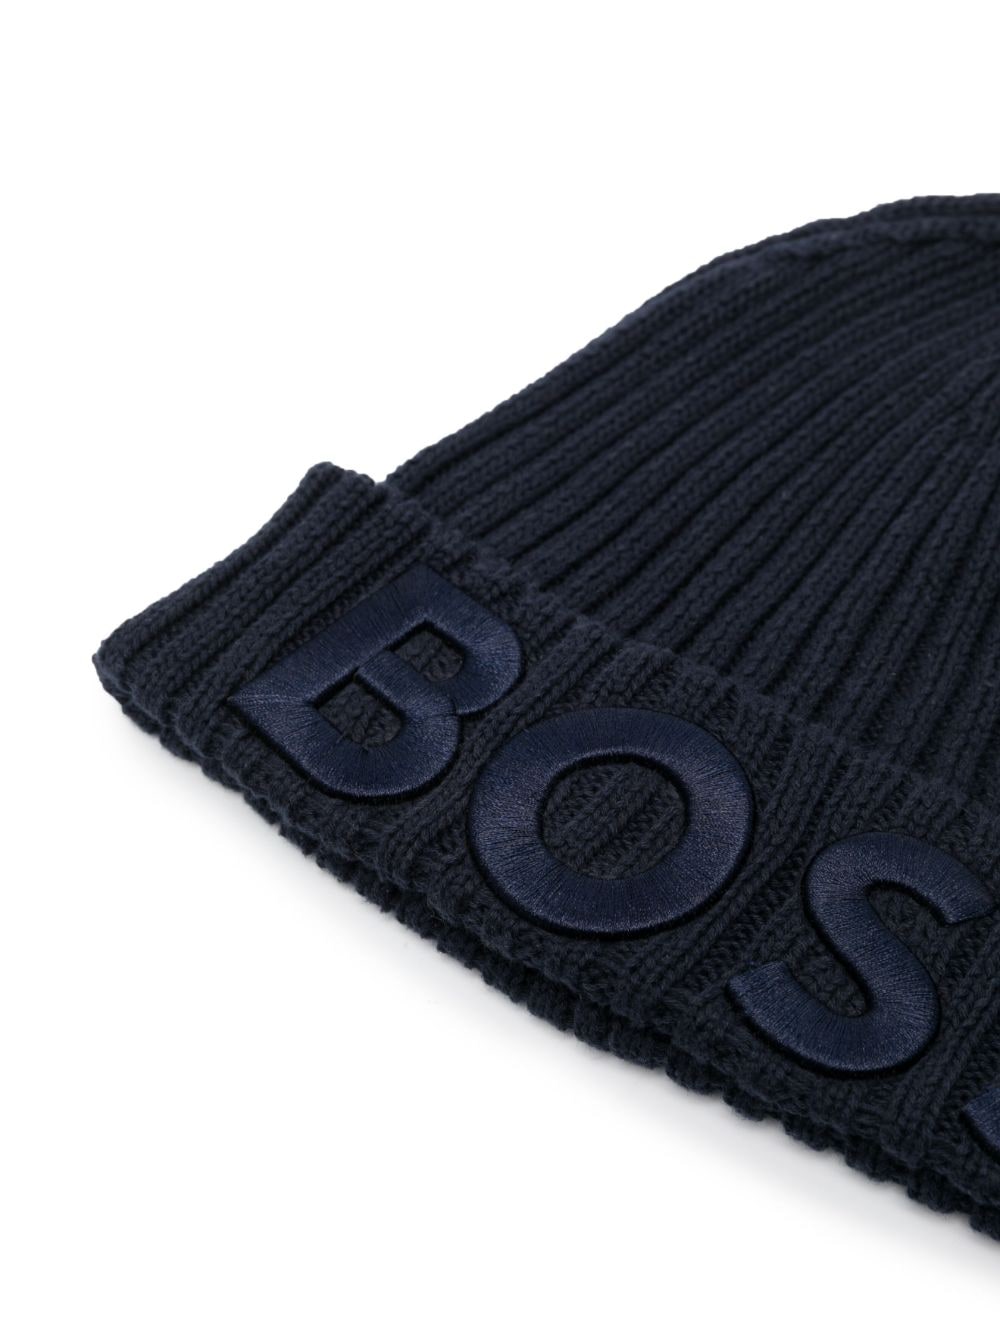 Shop Bosswear Embroidered-logo Beanie Hat In Blue